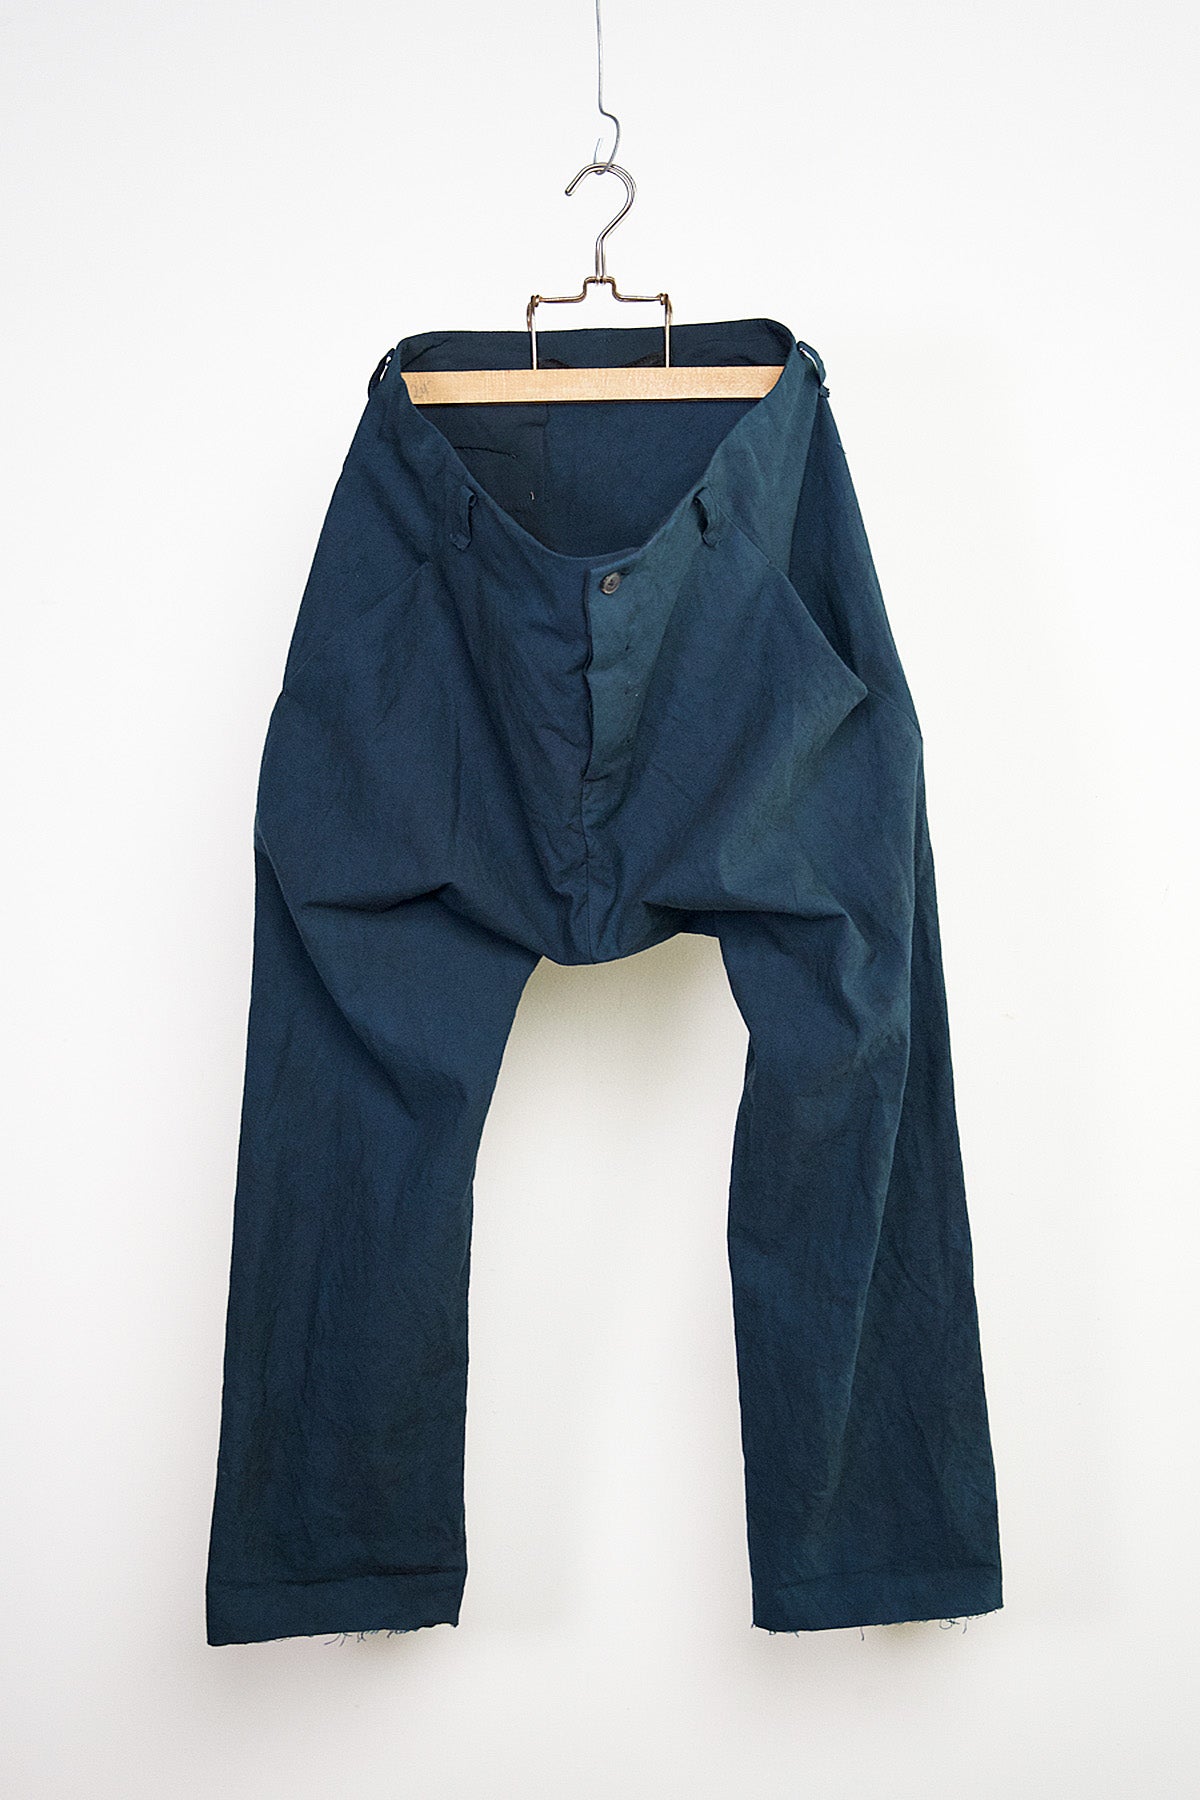 low crotch 2 pocket pants